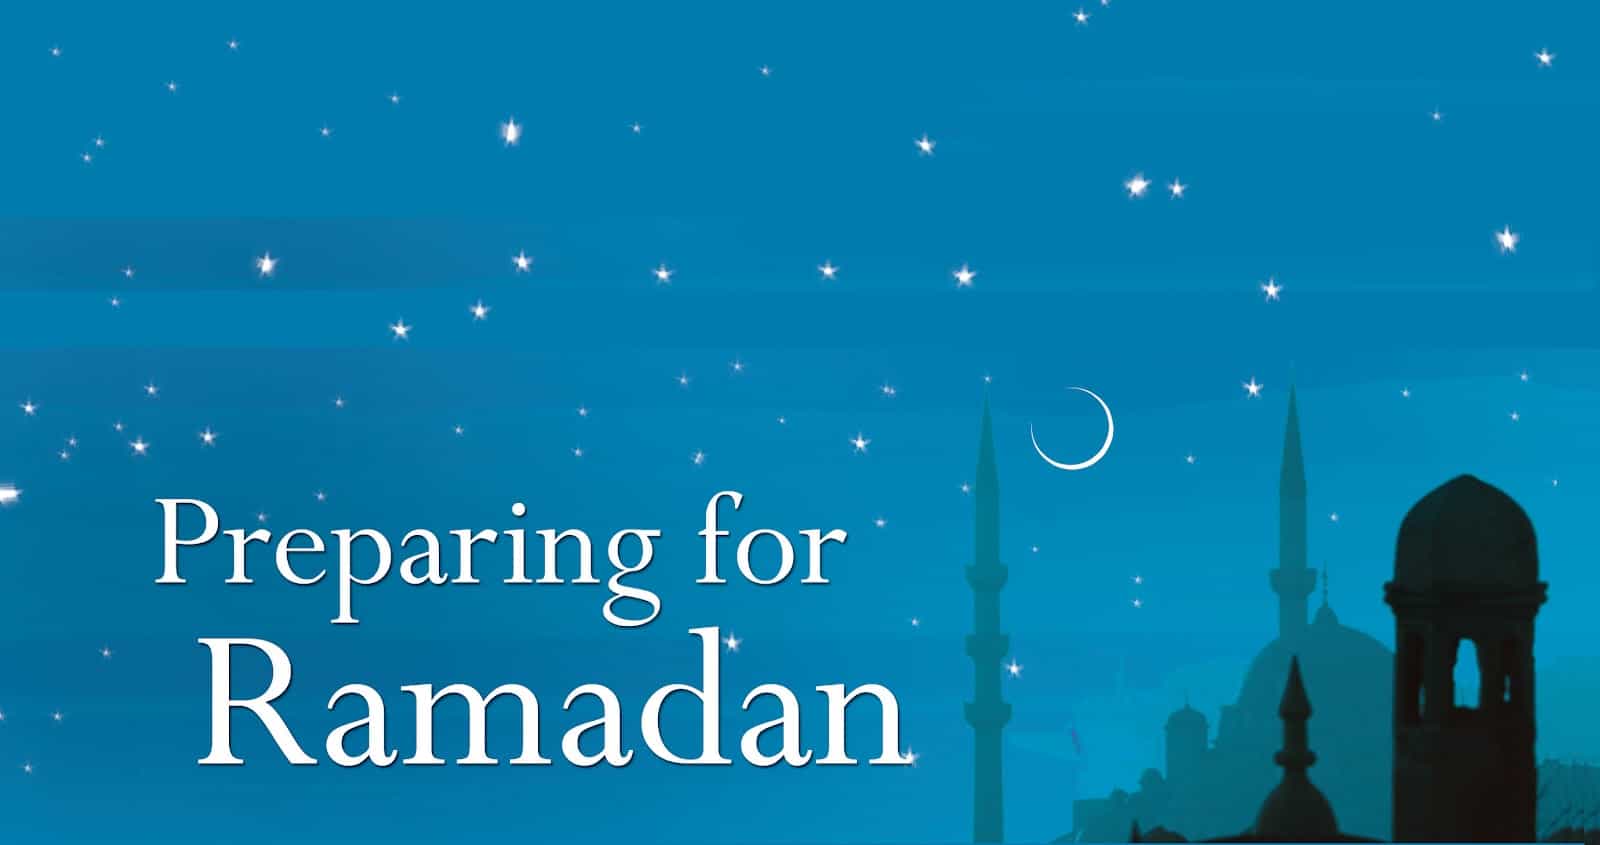 Ramadan Status